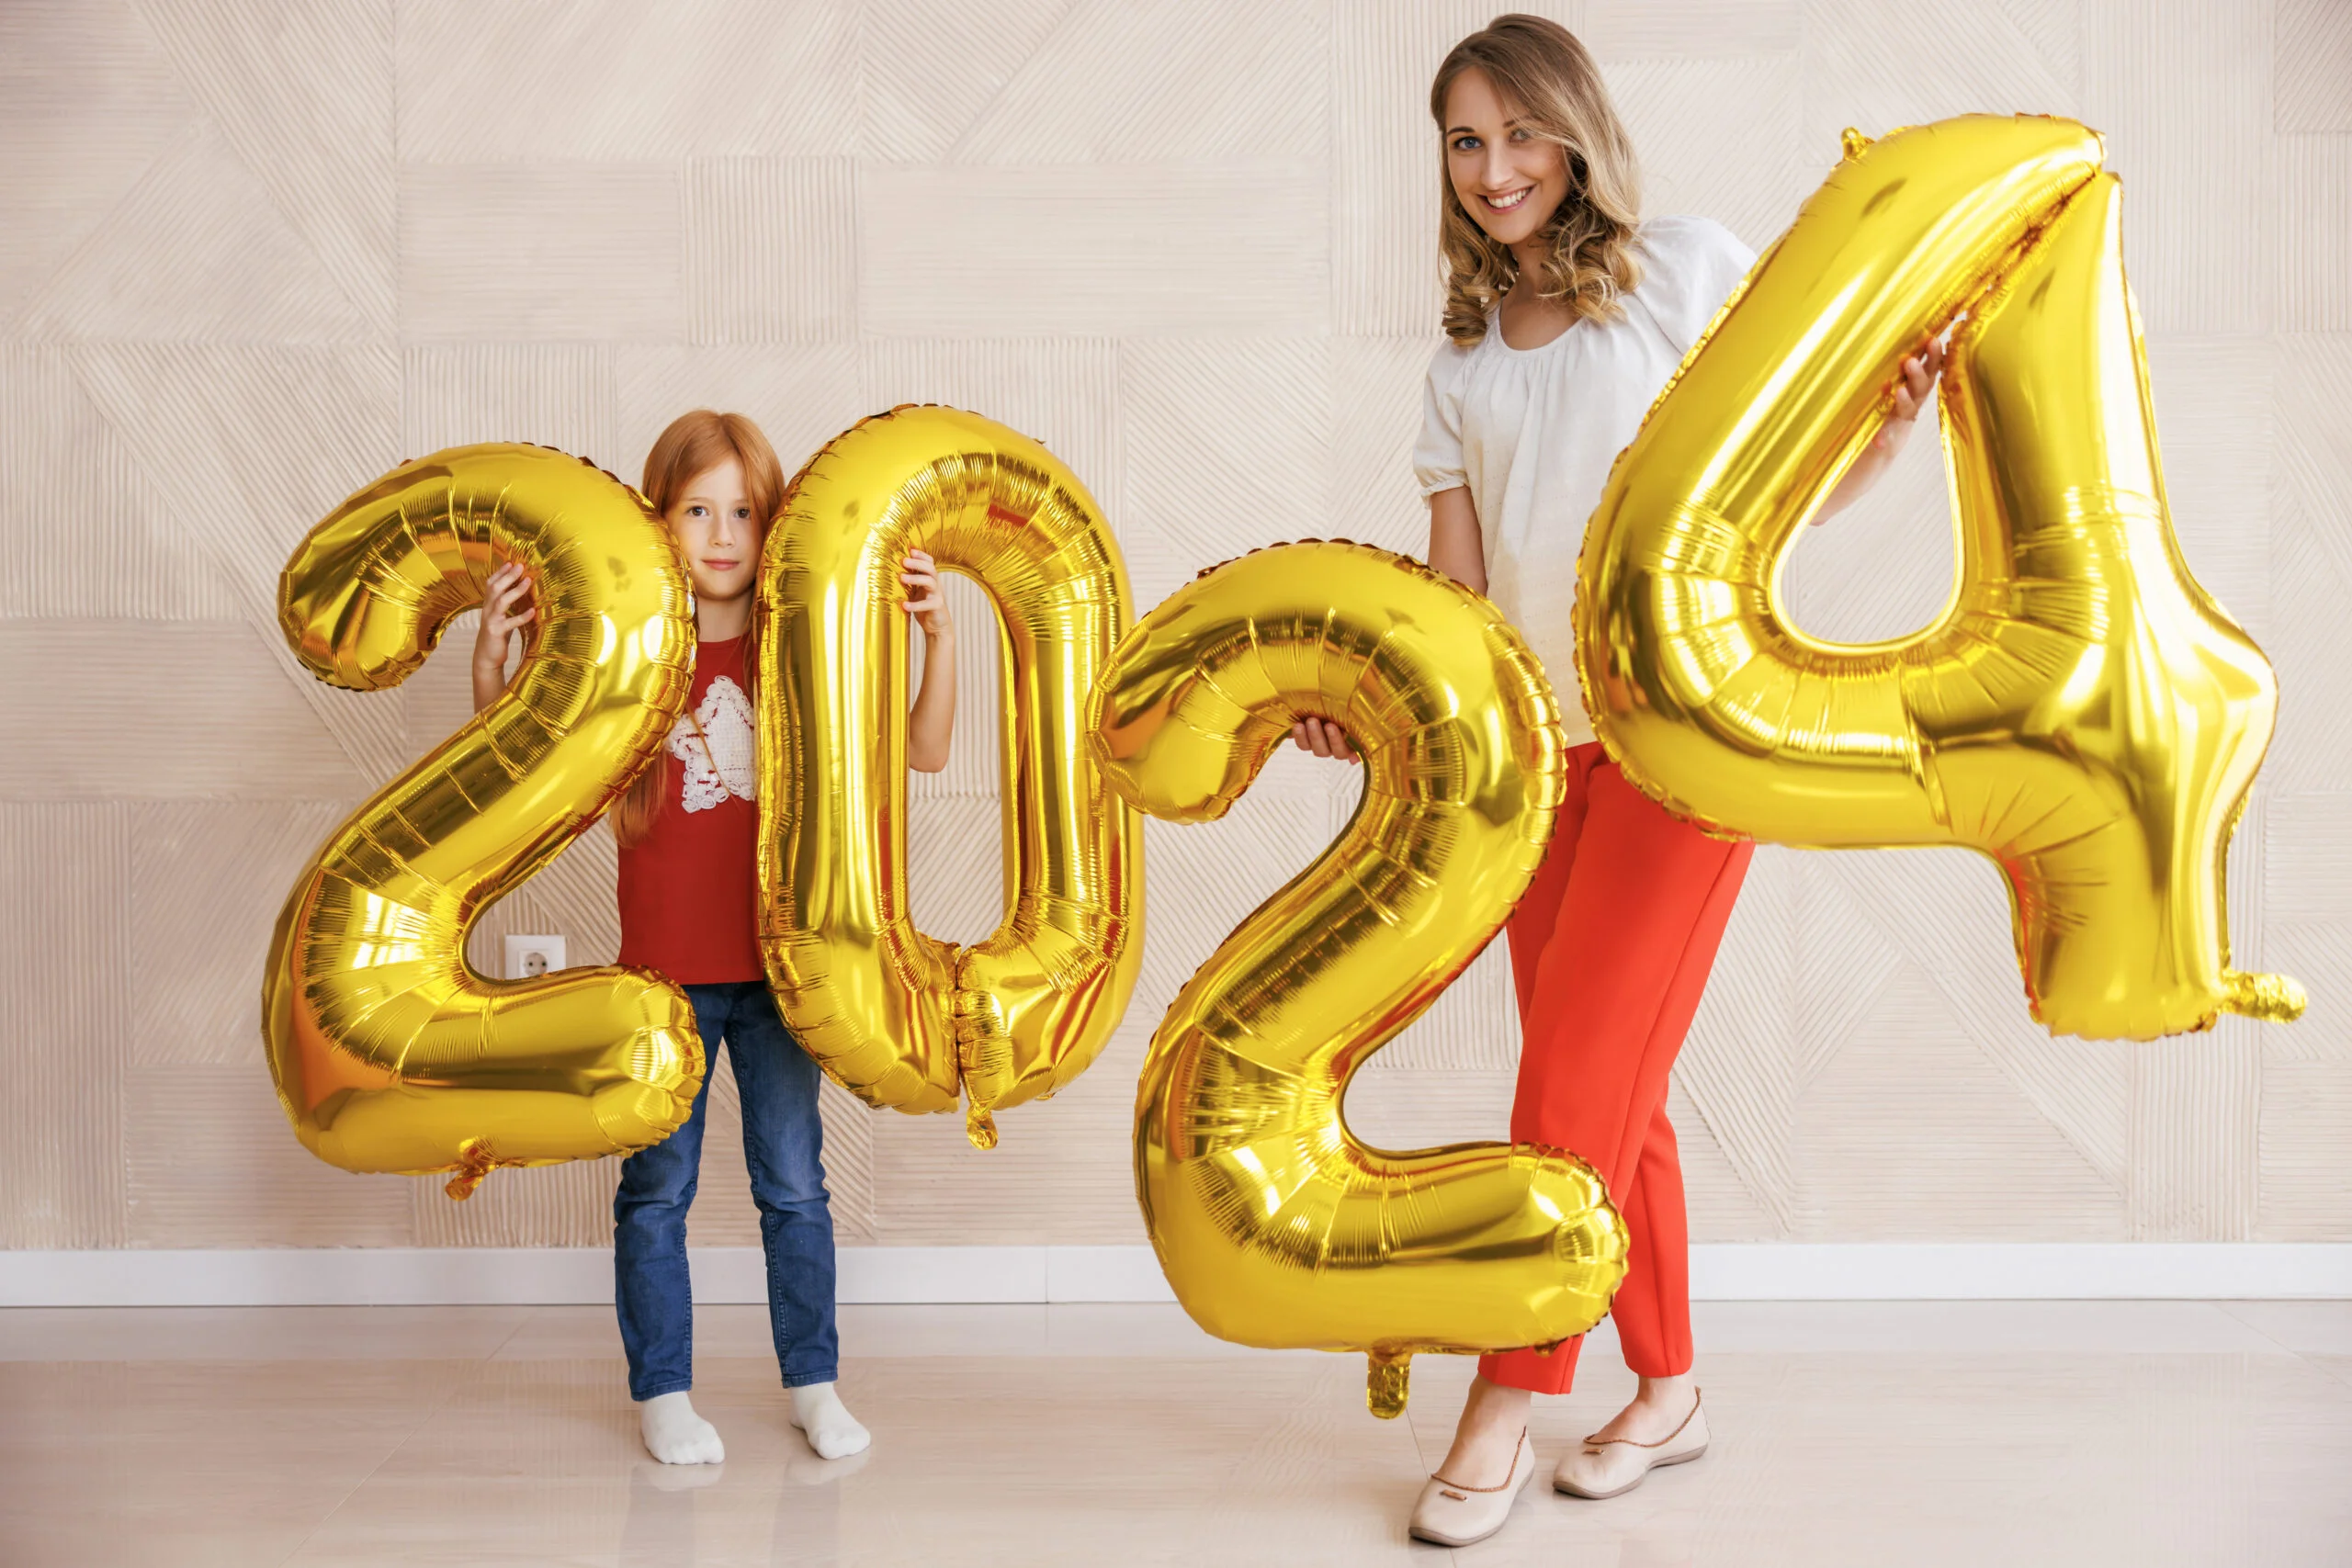 2024 New Year's Eve Mylar Balloon Display (Gold)